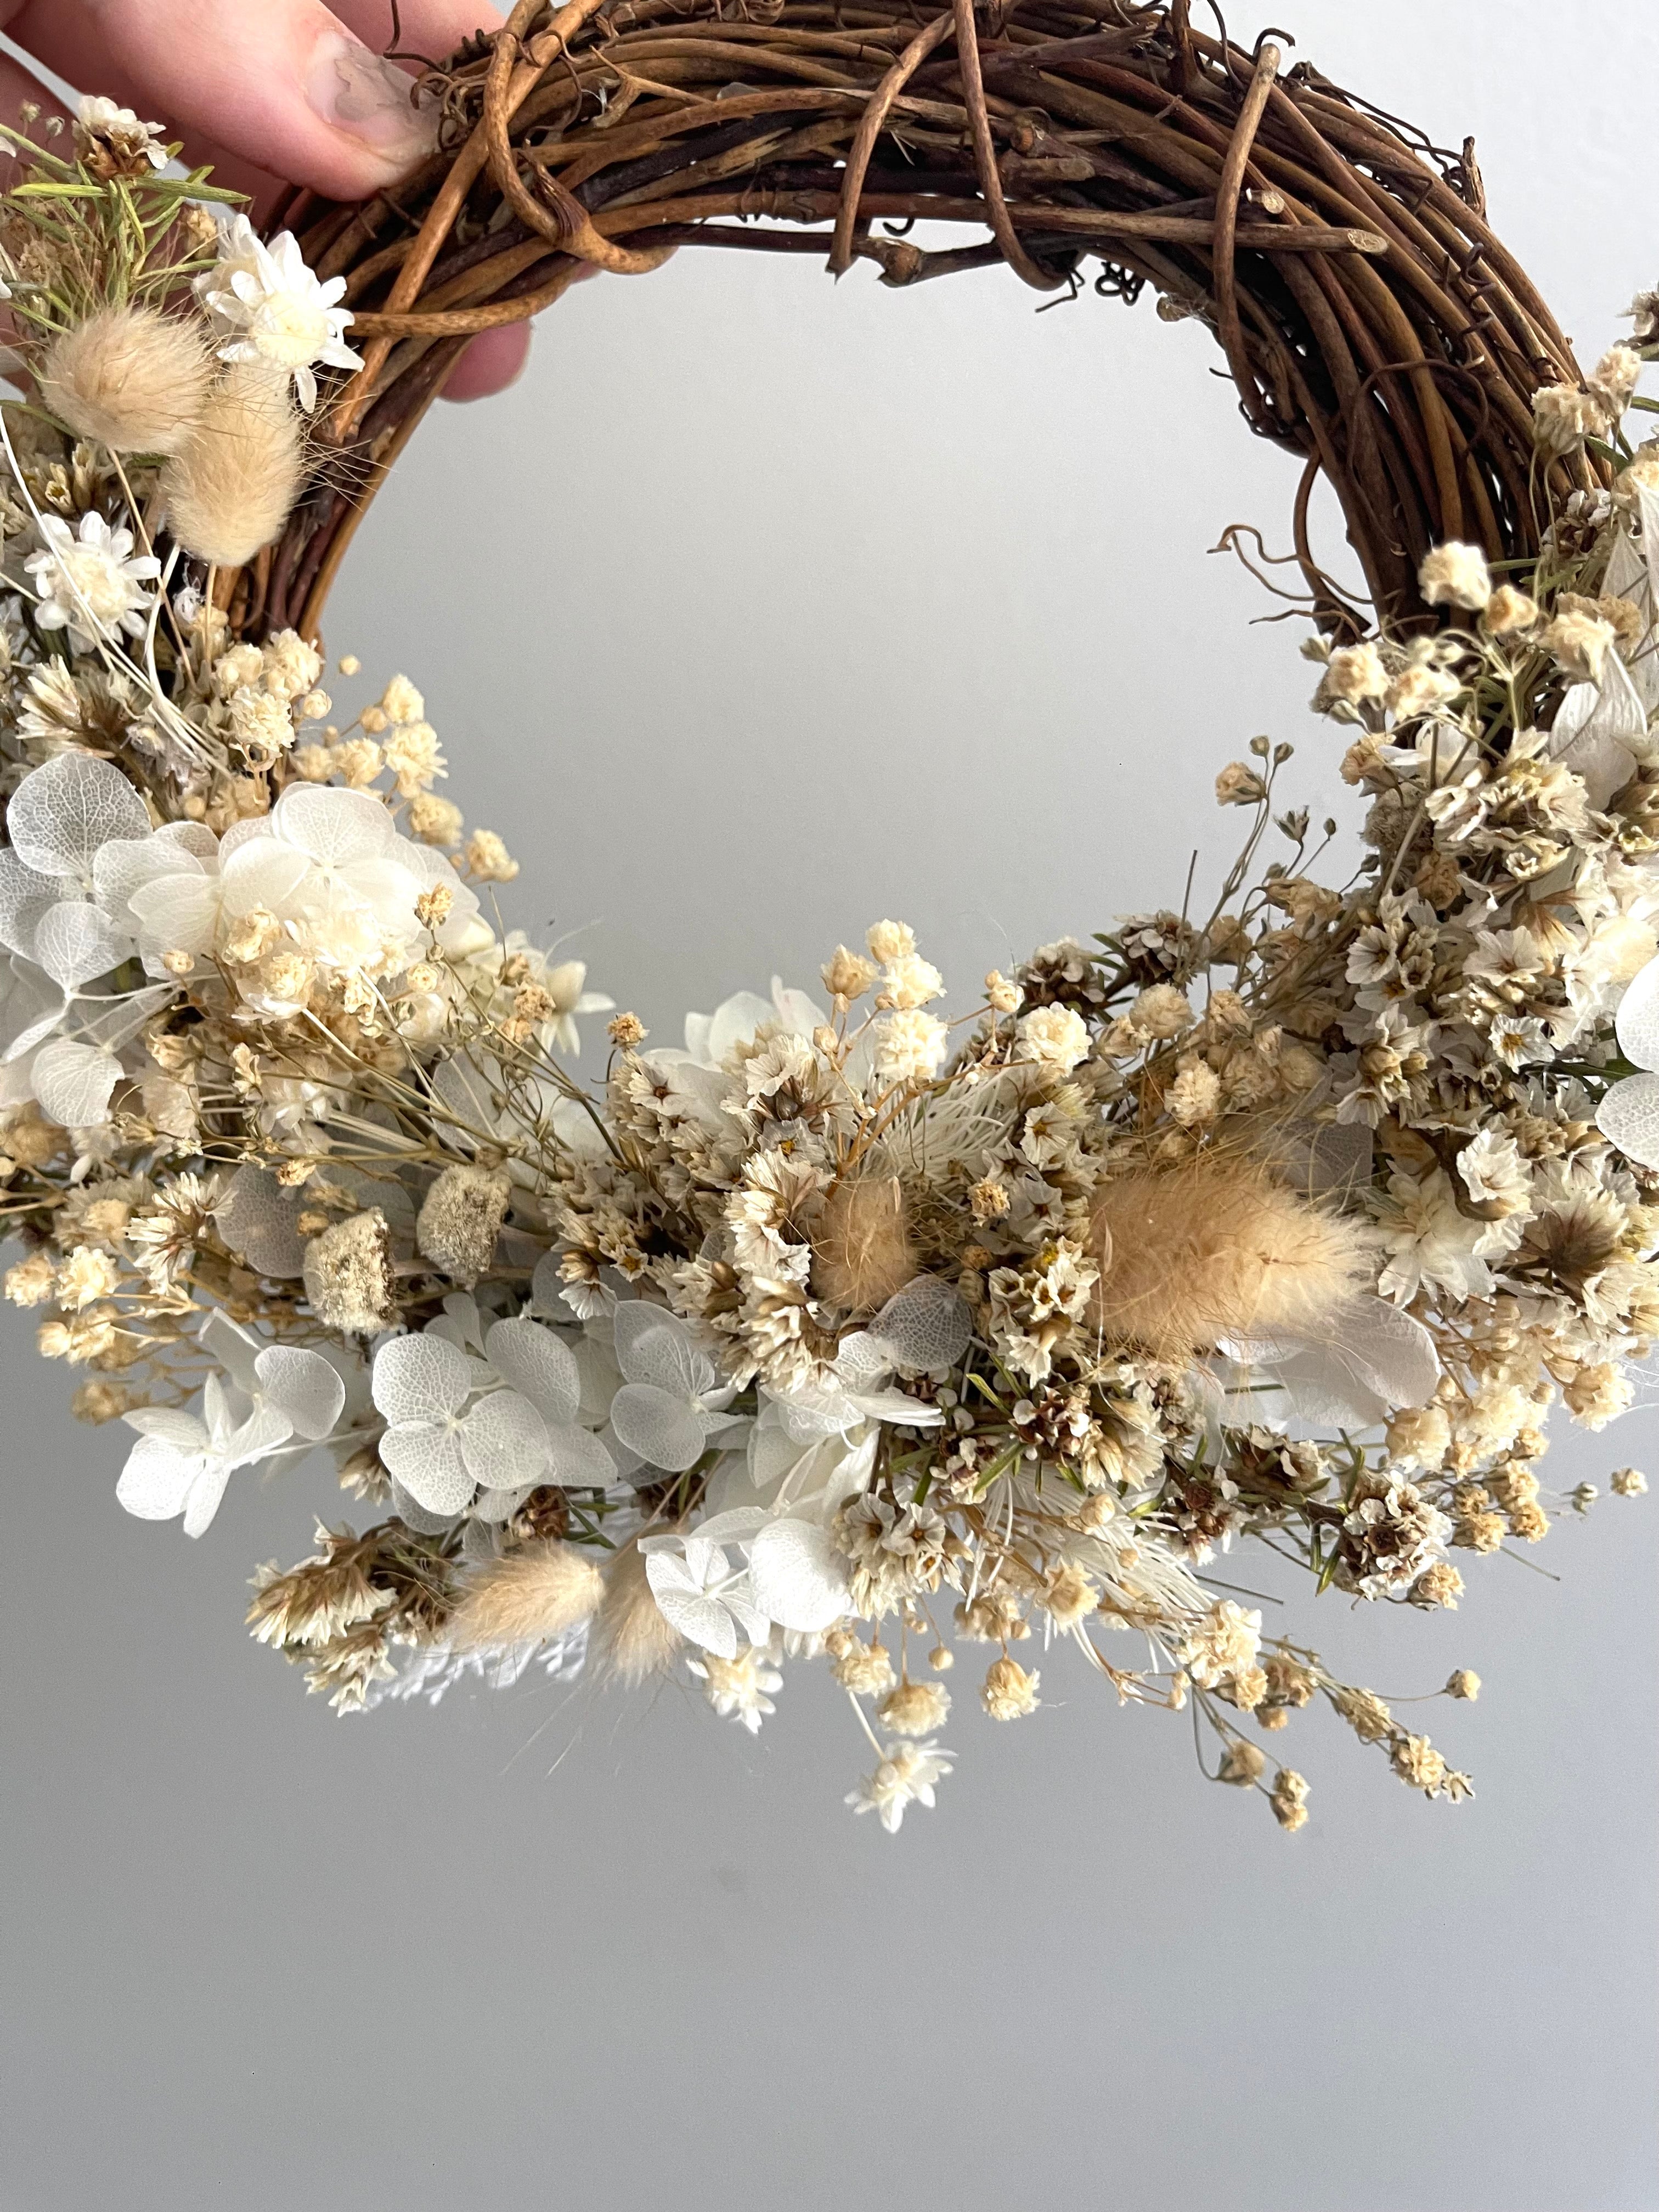 Mini everlasting floral wreaths - white/natural.